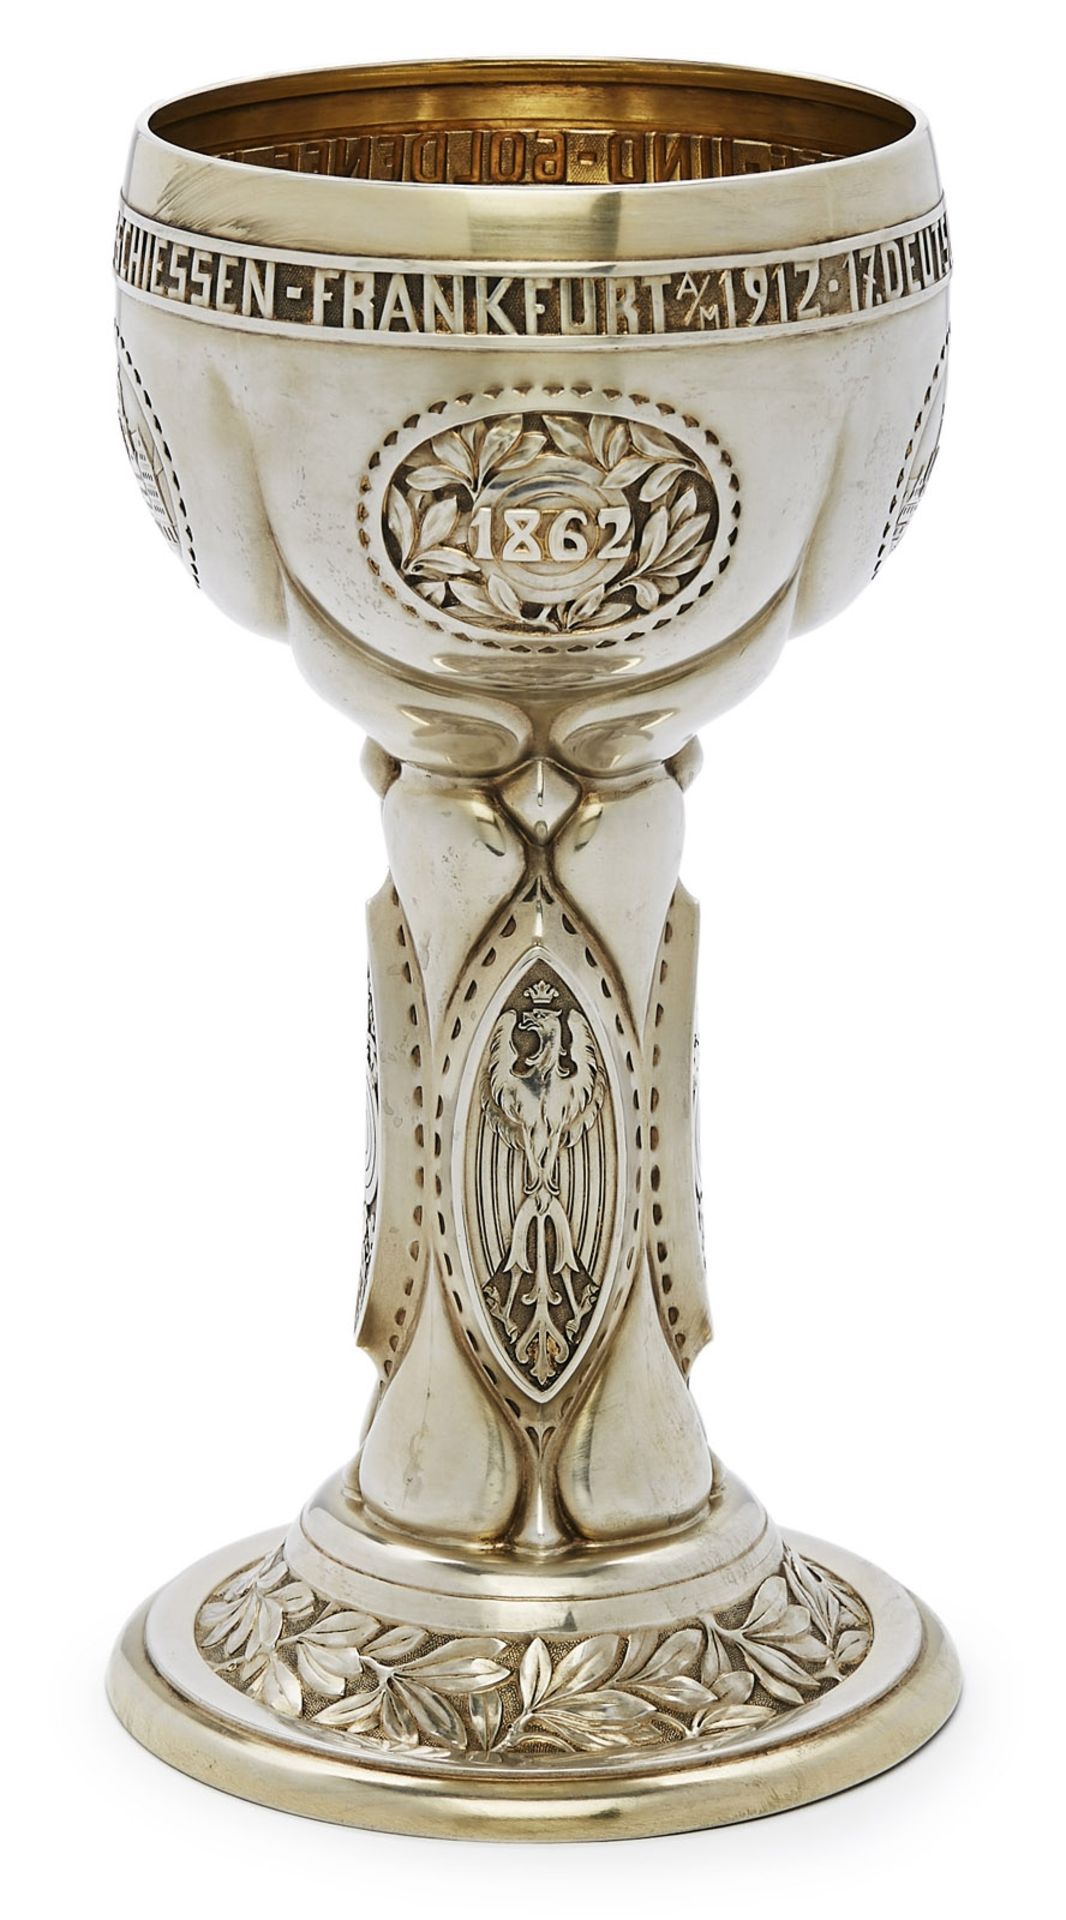 Pokal "Jubiläums-Schiessen Frankfurt 1912". - Image 2 of 2